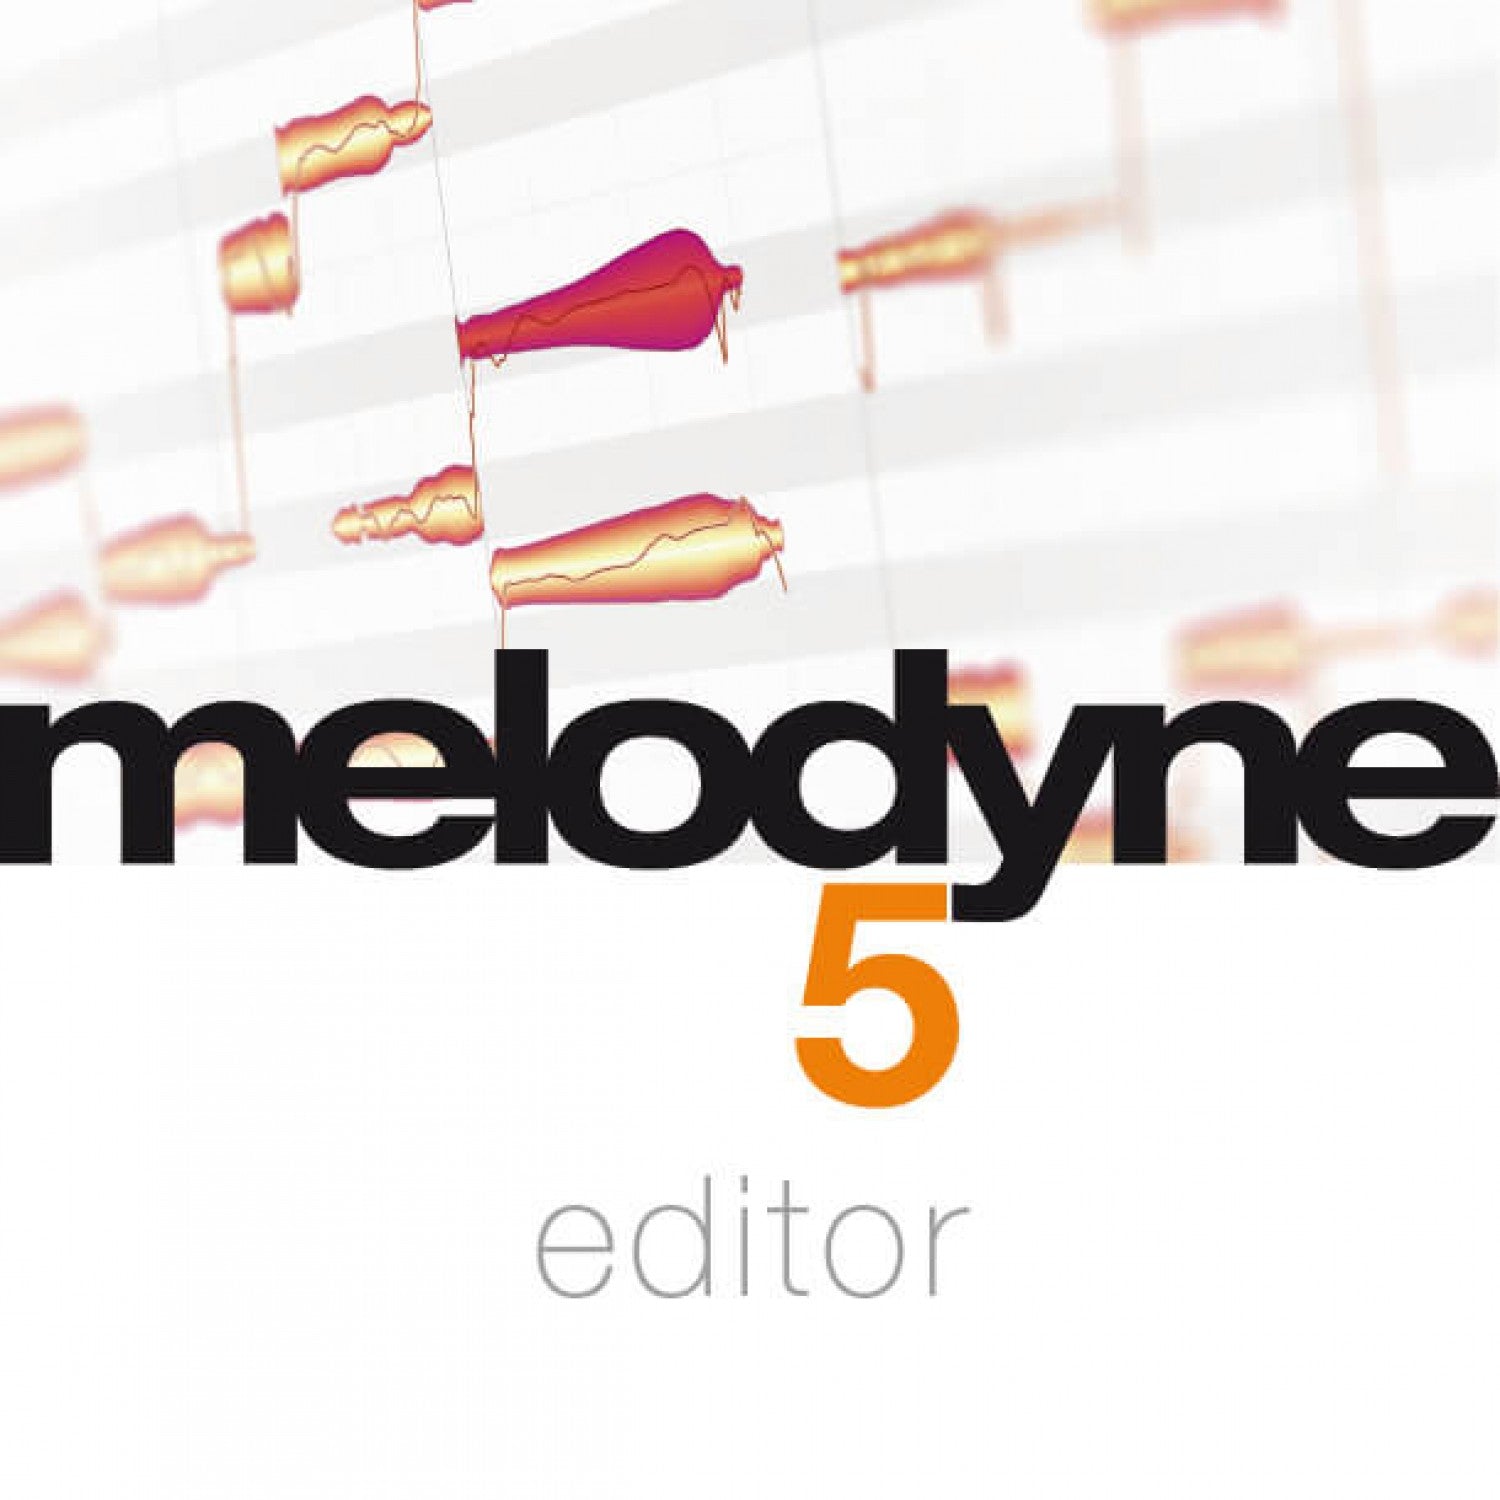 (Update) Celemony 舊版本 Melodyne Editor 更新成 Melodyne 5 Editor 音樂軟體 (下載版)